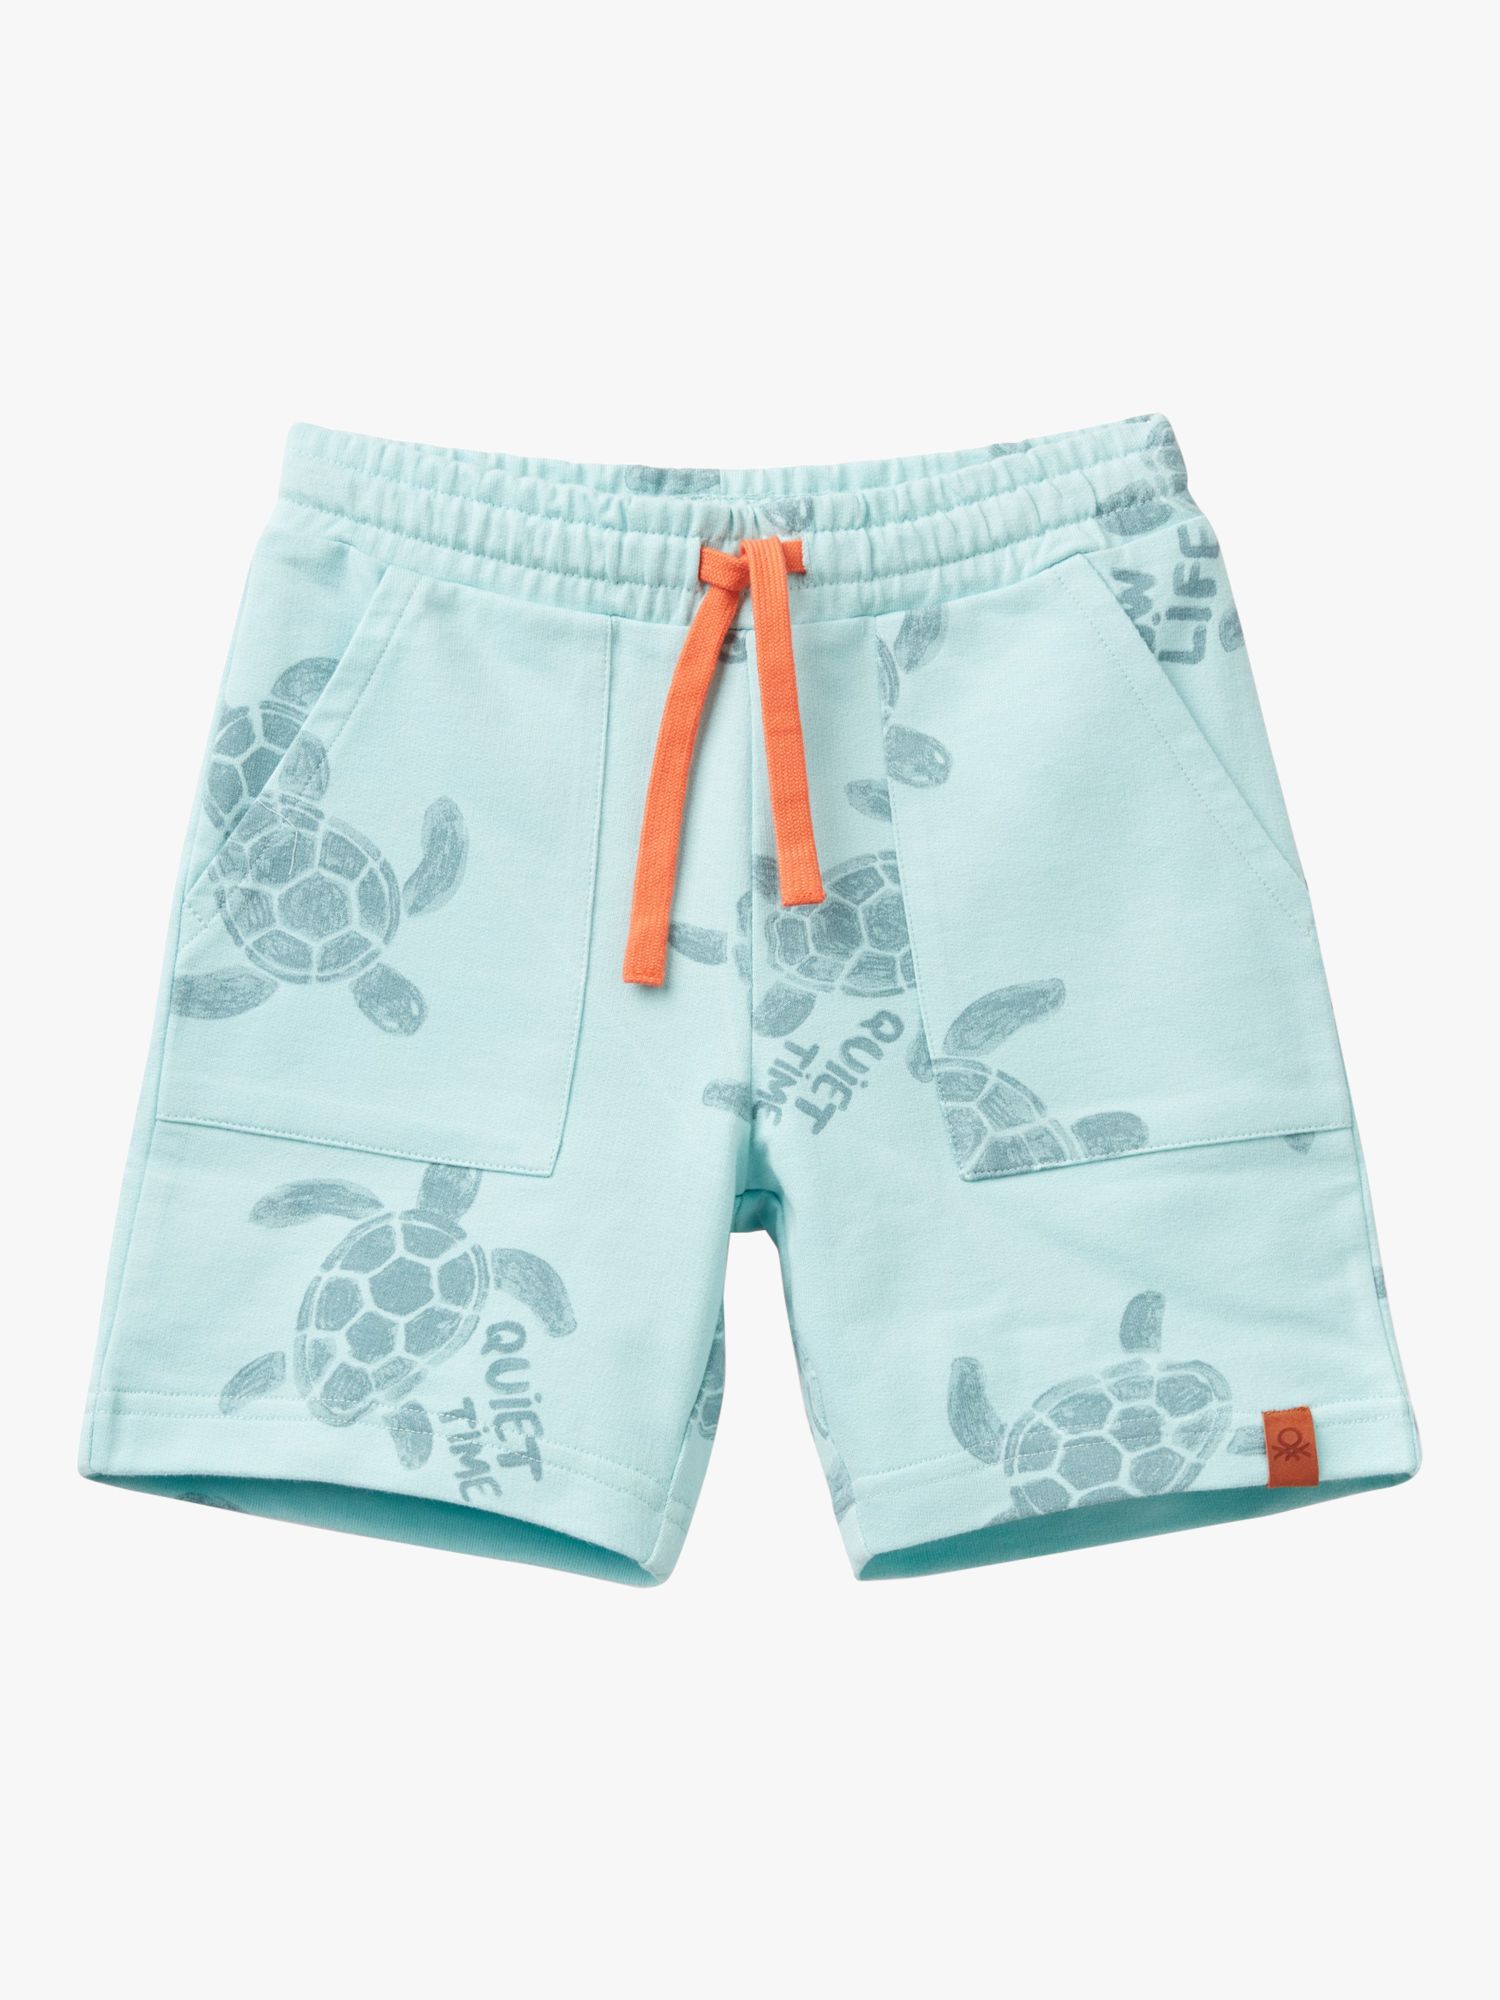 Benetton Kids' Turtle Print Fleece Drawstring Bermuda Shorts, Blue/Multi, 3-4 years